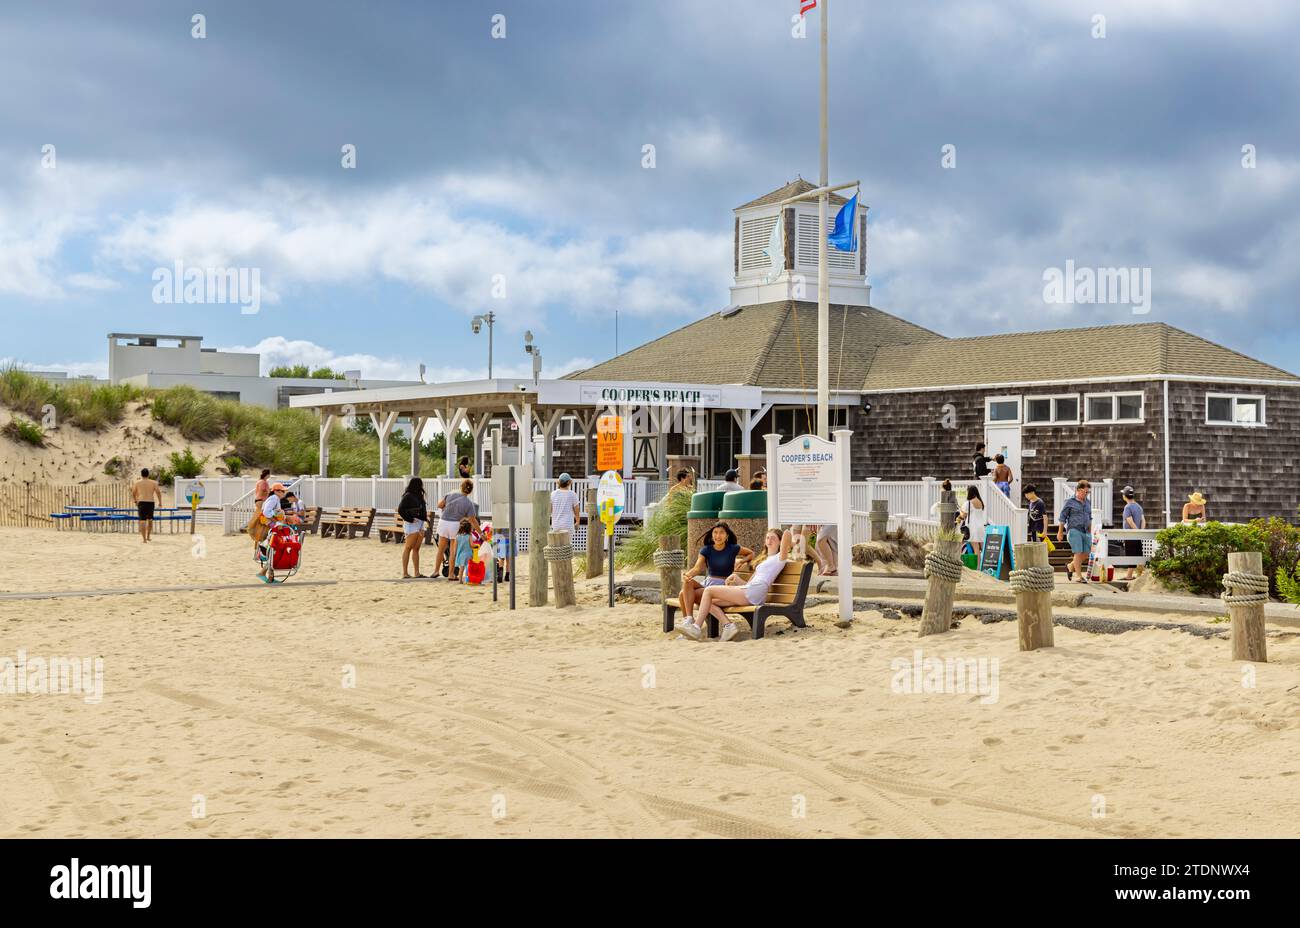 Leute an einem Sommertag am Copers Beach Stockfoto